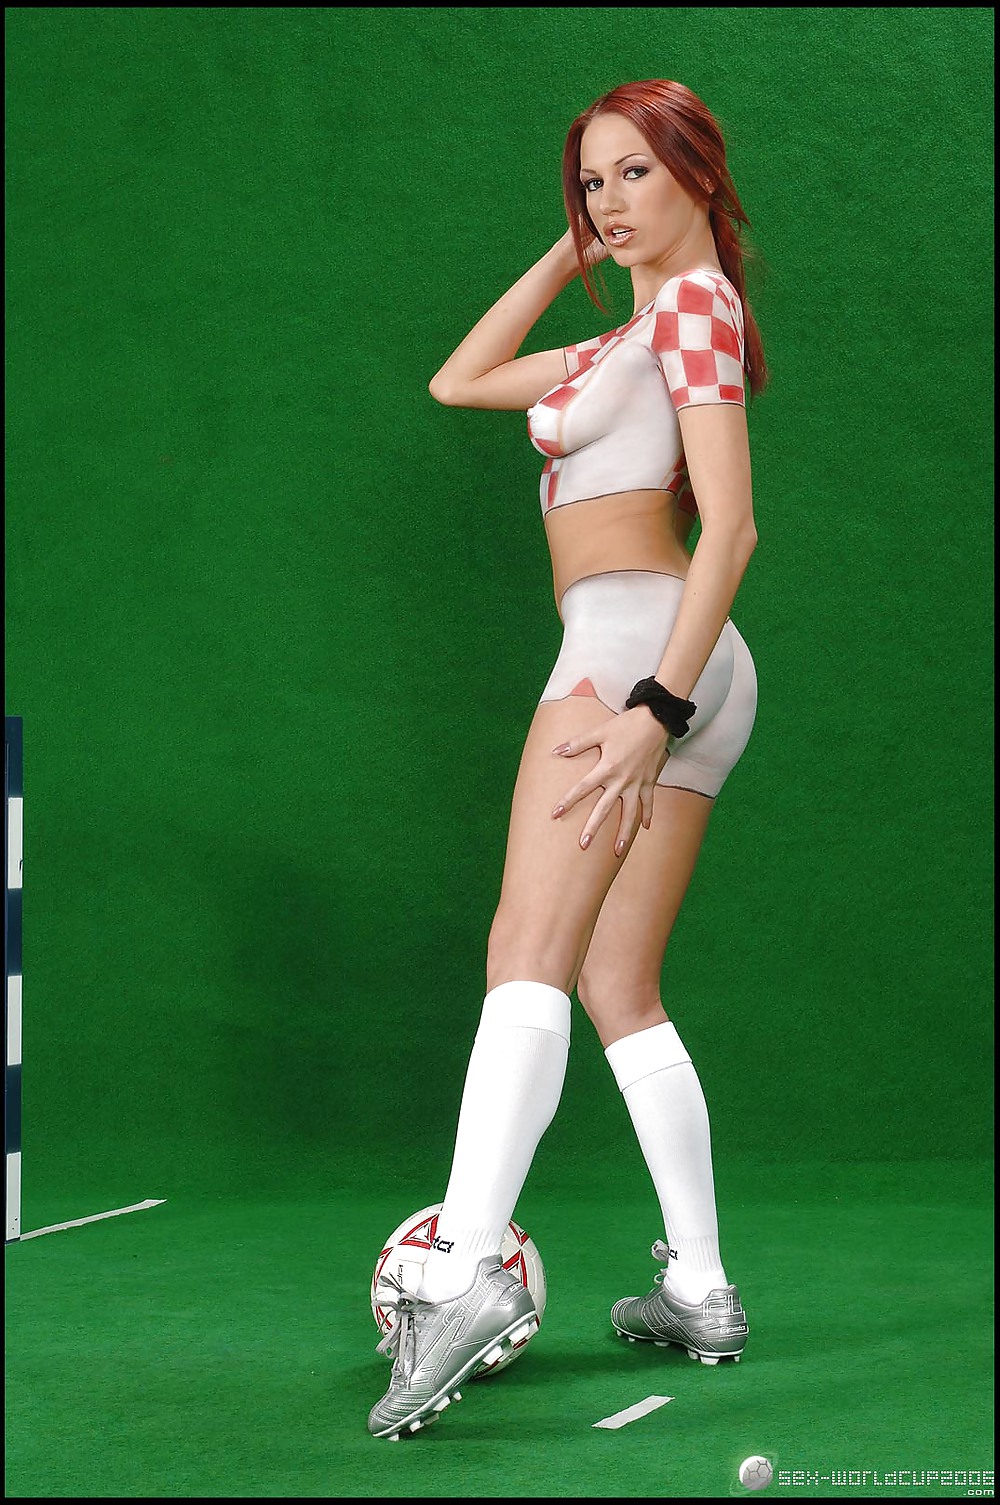 Mundial de fútbol - pintura corporal
 #15269283